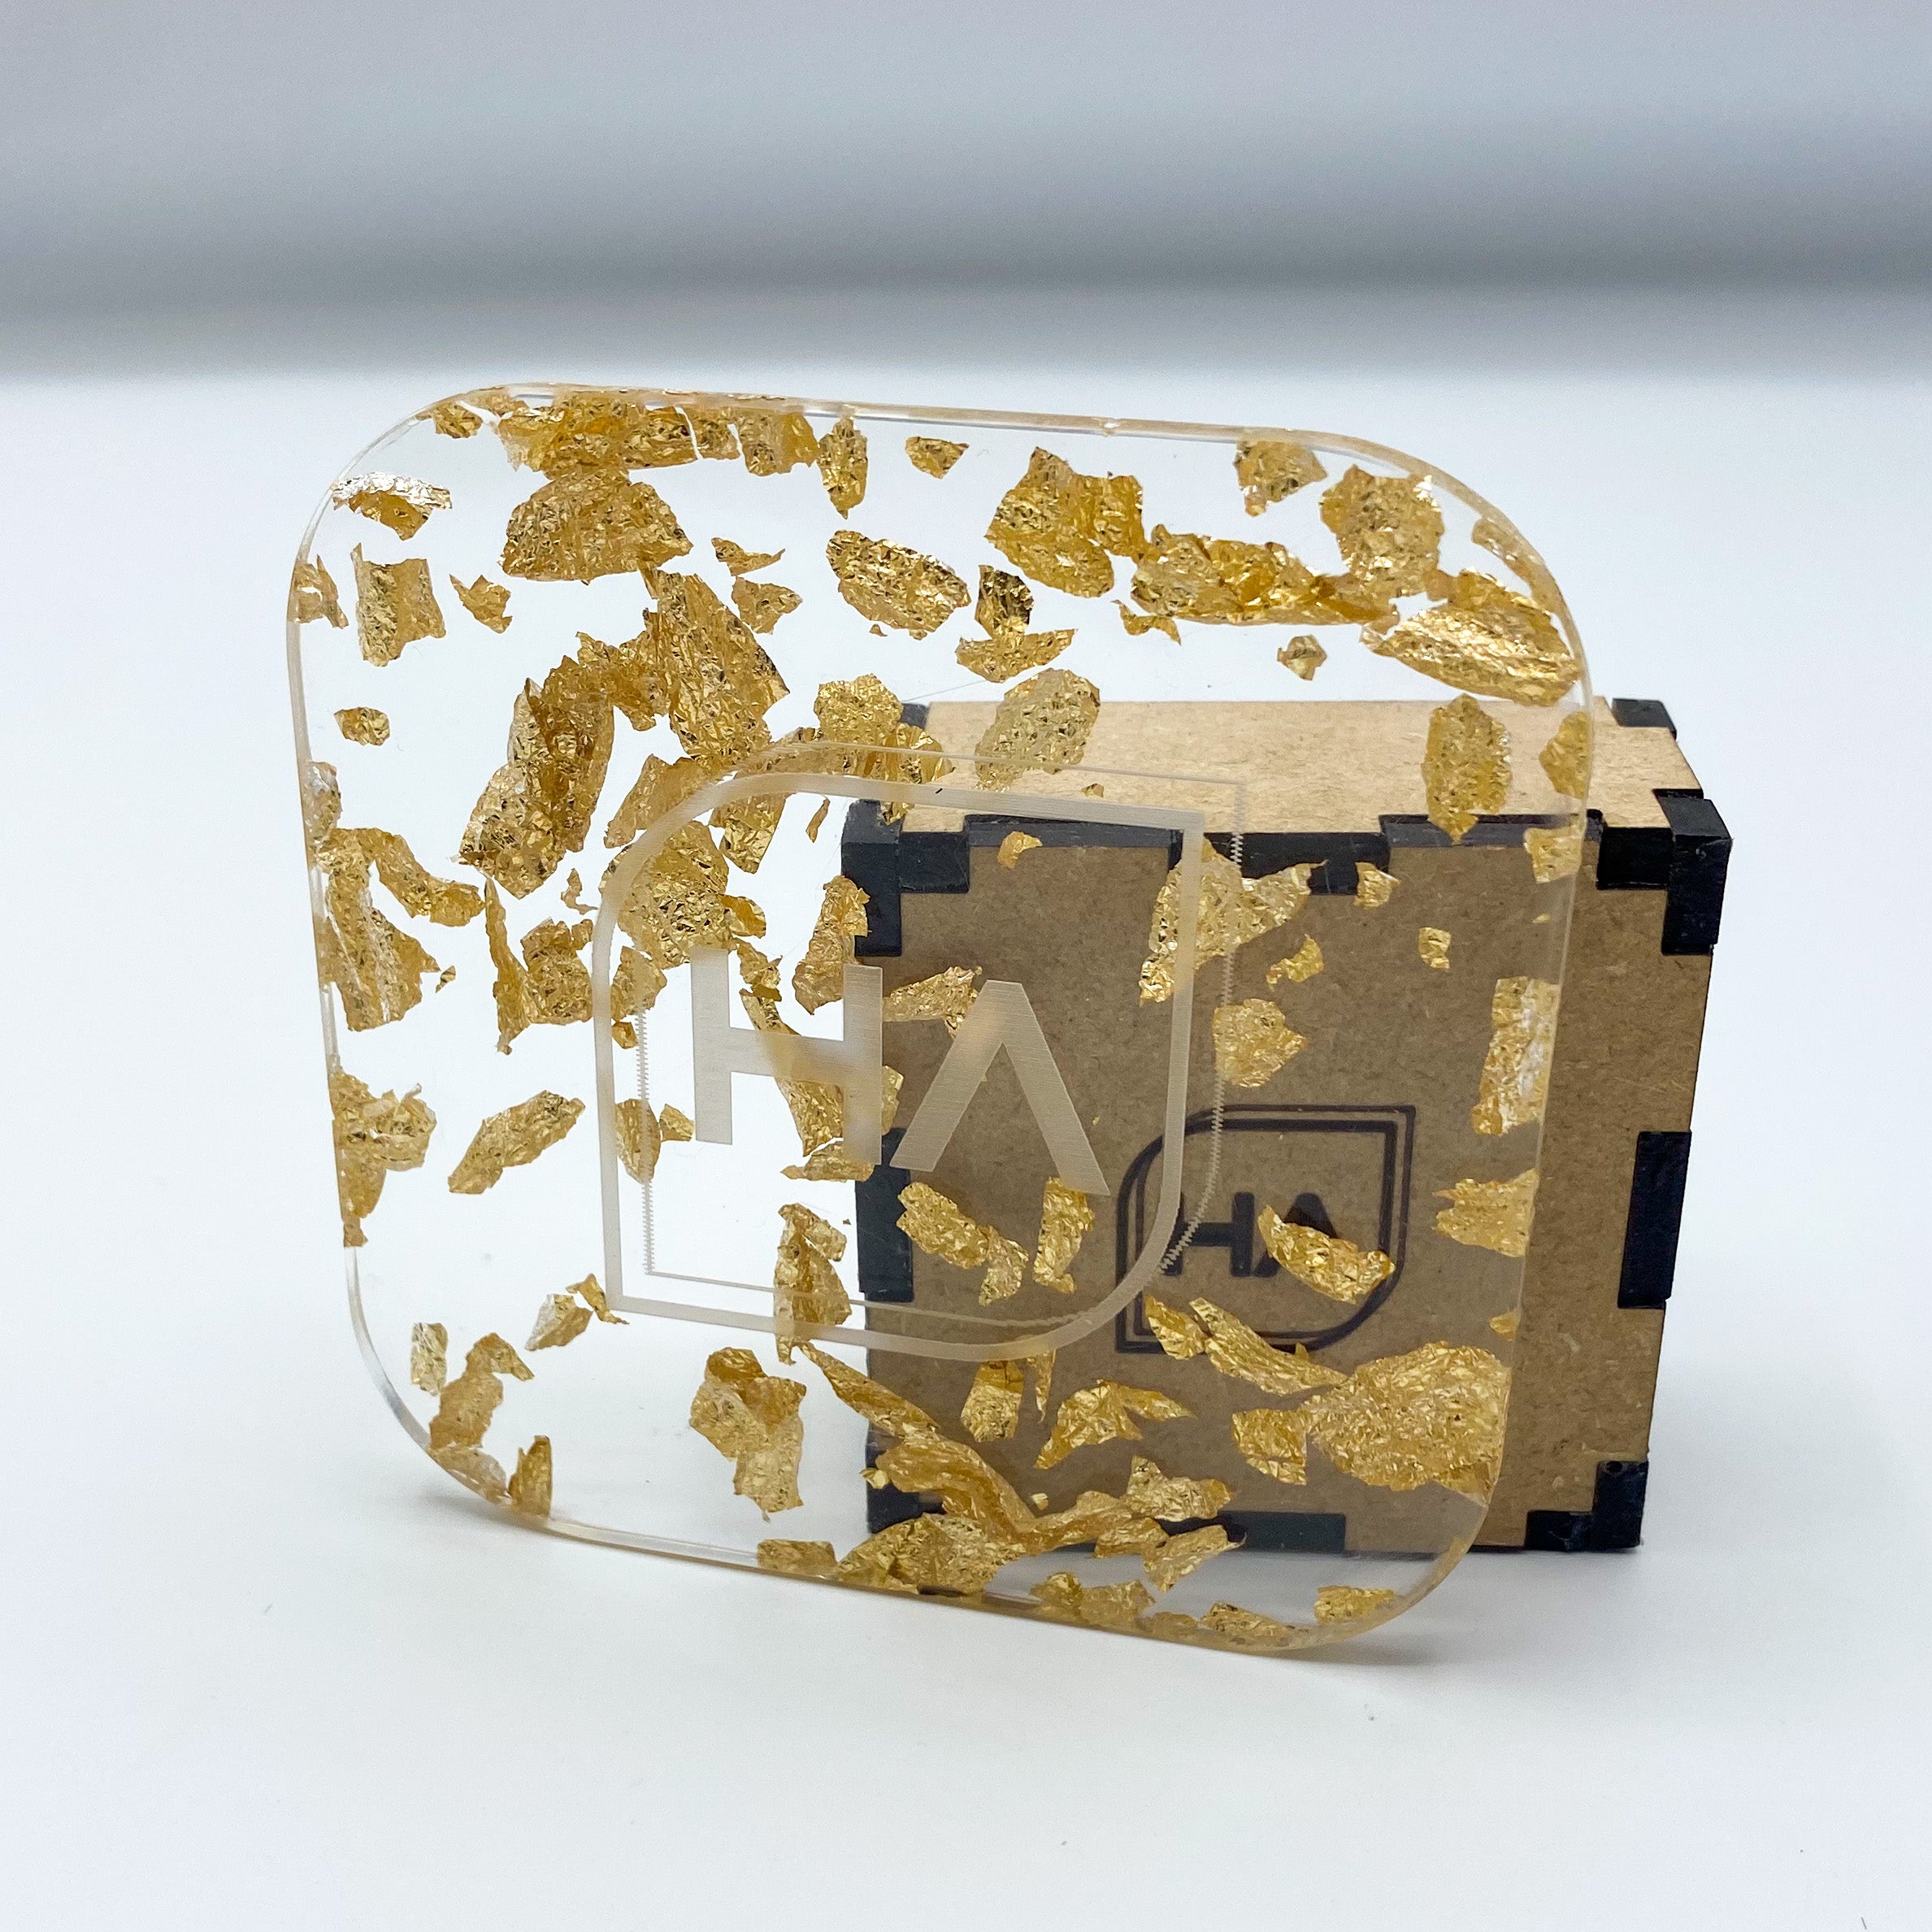 Edible Gold Leaf Flakes in Clear Acrylic Cube Shaker. 100mg. – Delitaliana